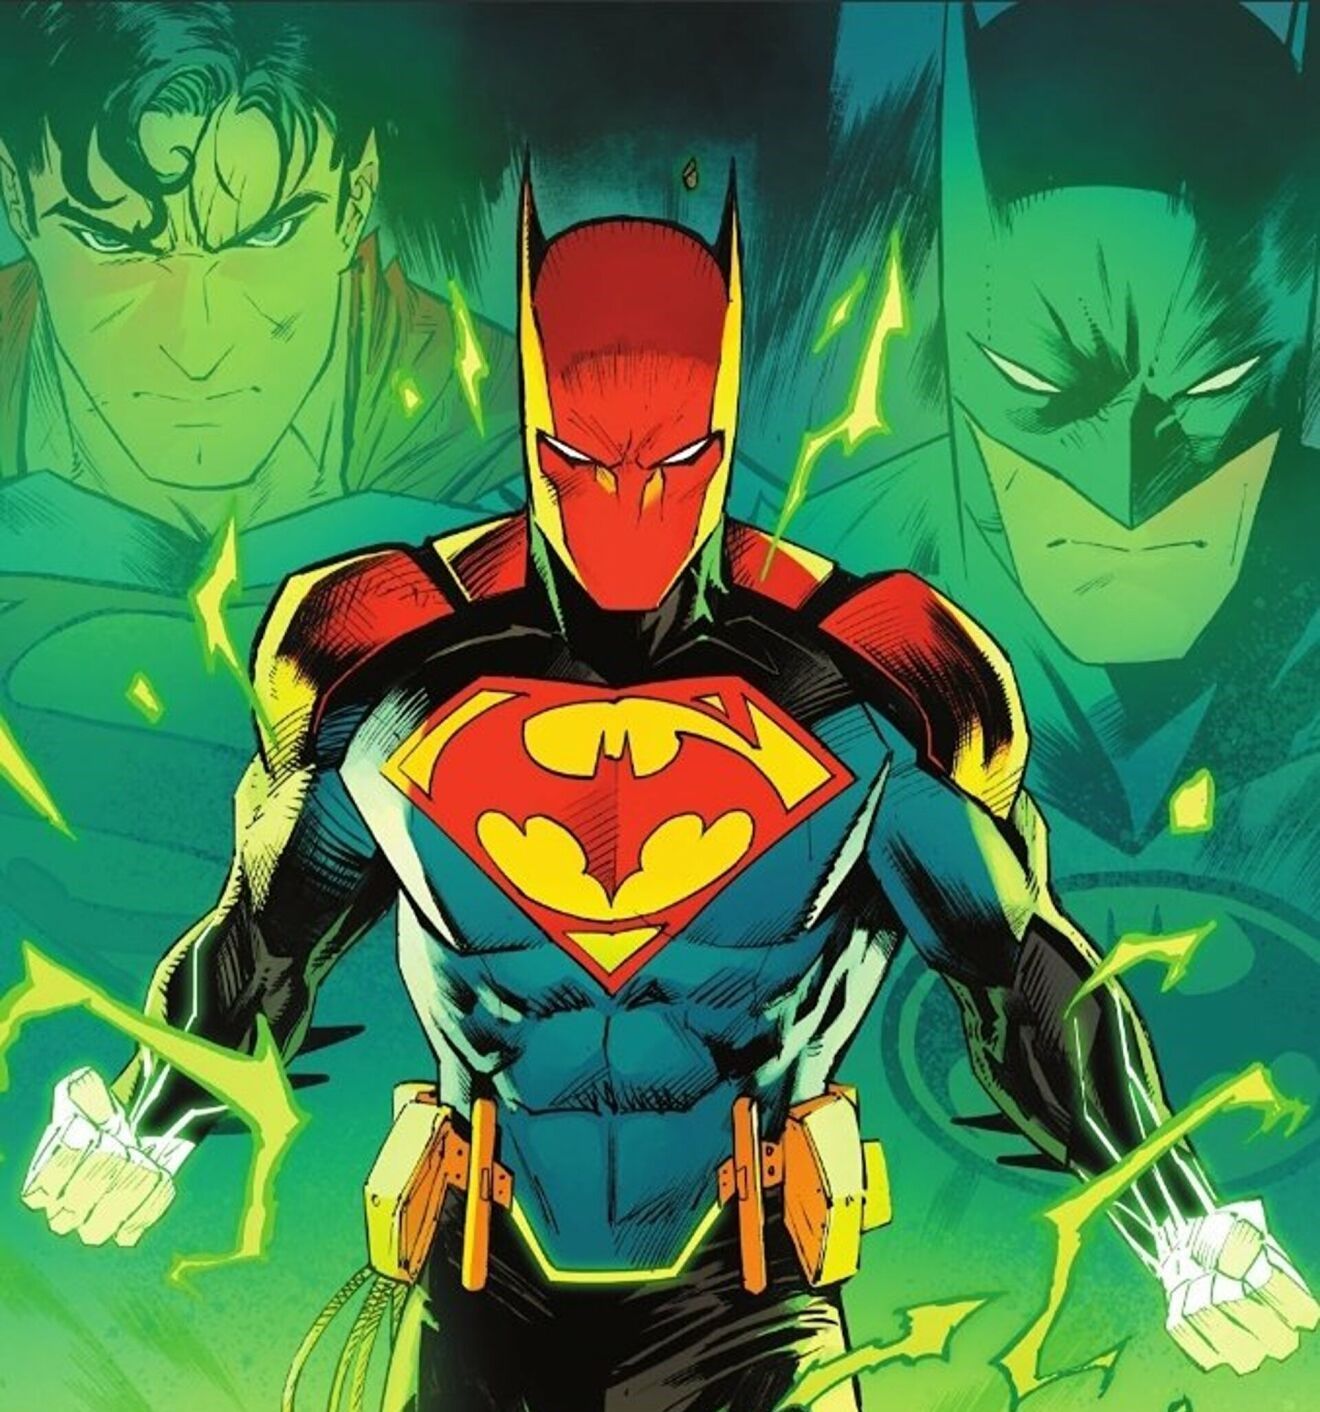 Batman and Superman merge into one superhero using Hal Jordan's Green Lantern ring